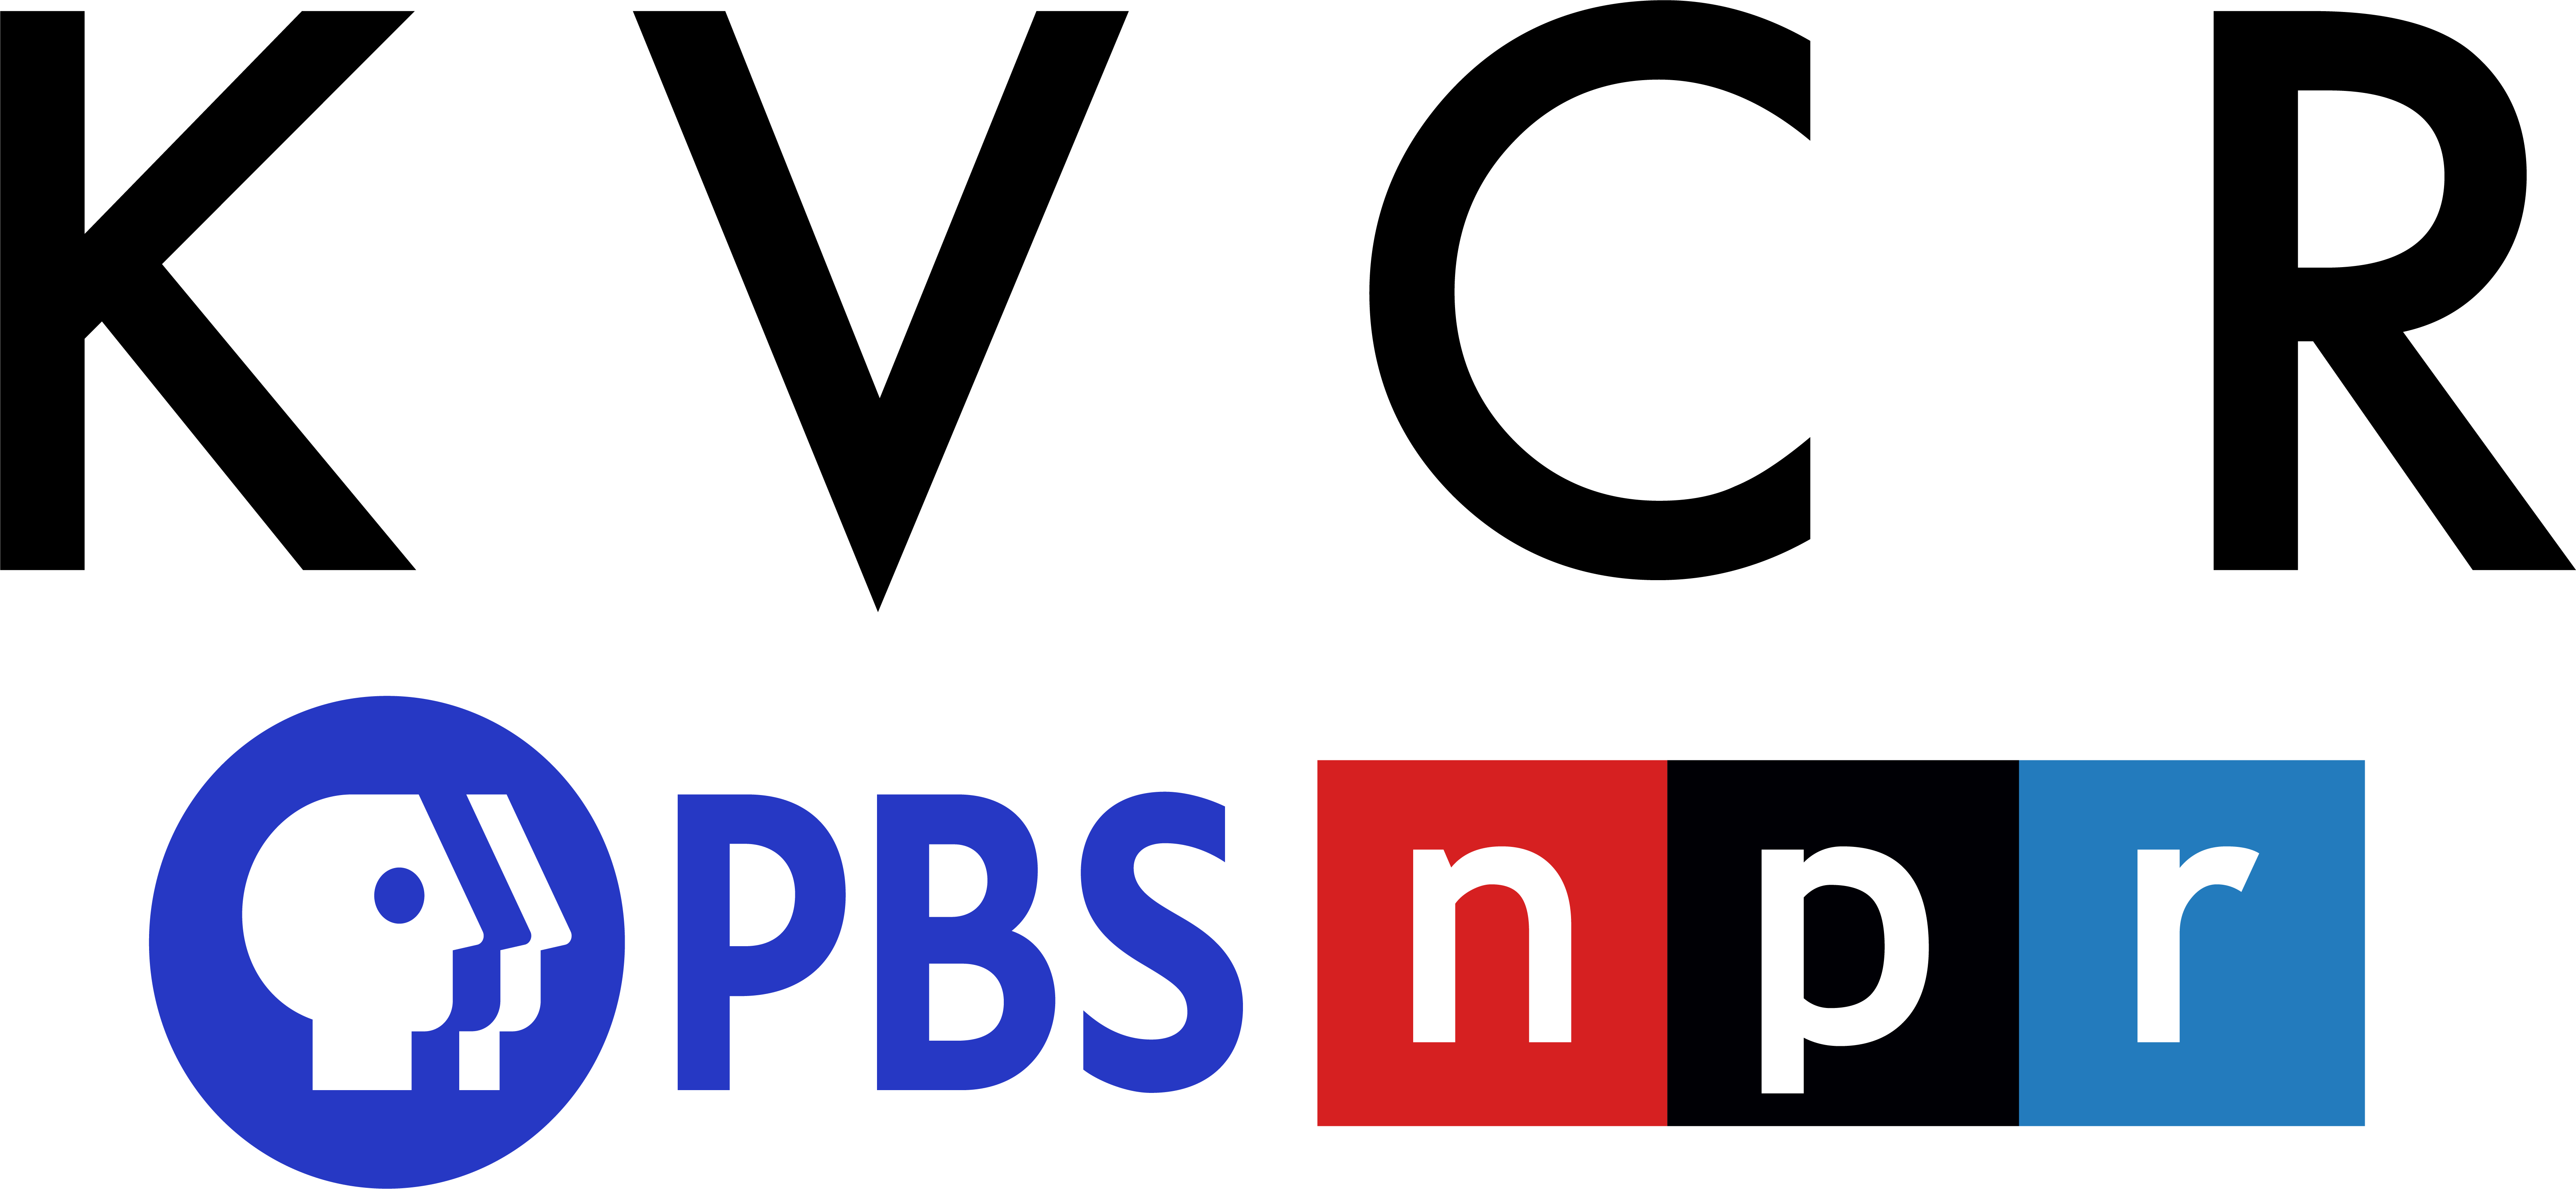 KVCR - PBS - NPR